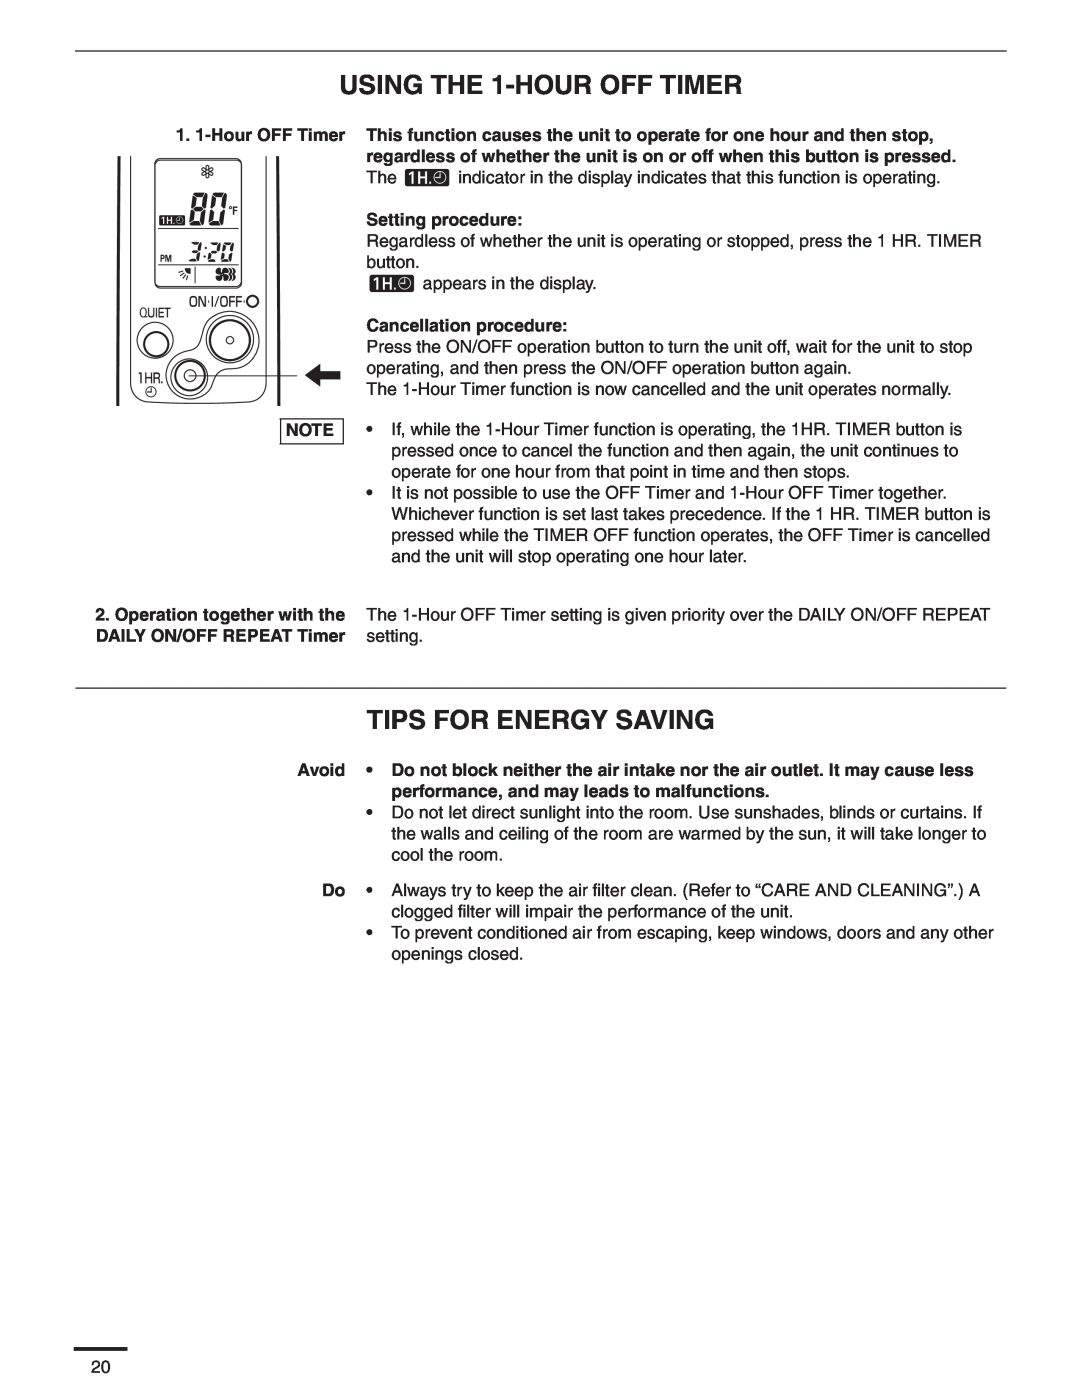 Panasonic CS-MKE24NKU USING THE 1-HOUR OFF TIMER, Tips For Energy Saving, Setting procedure, Cancellation procedure 